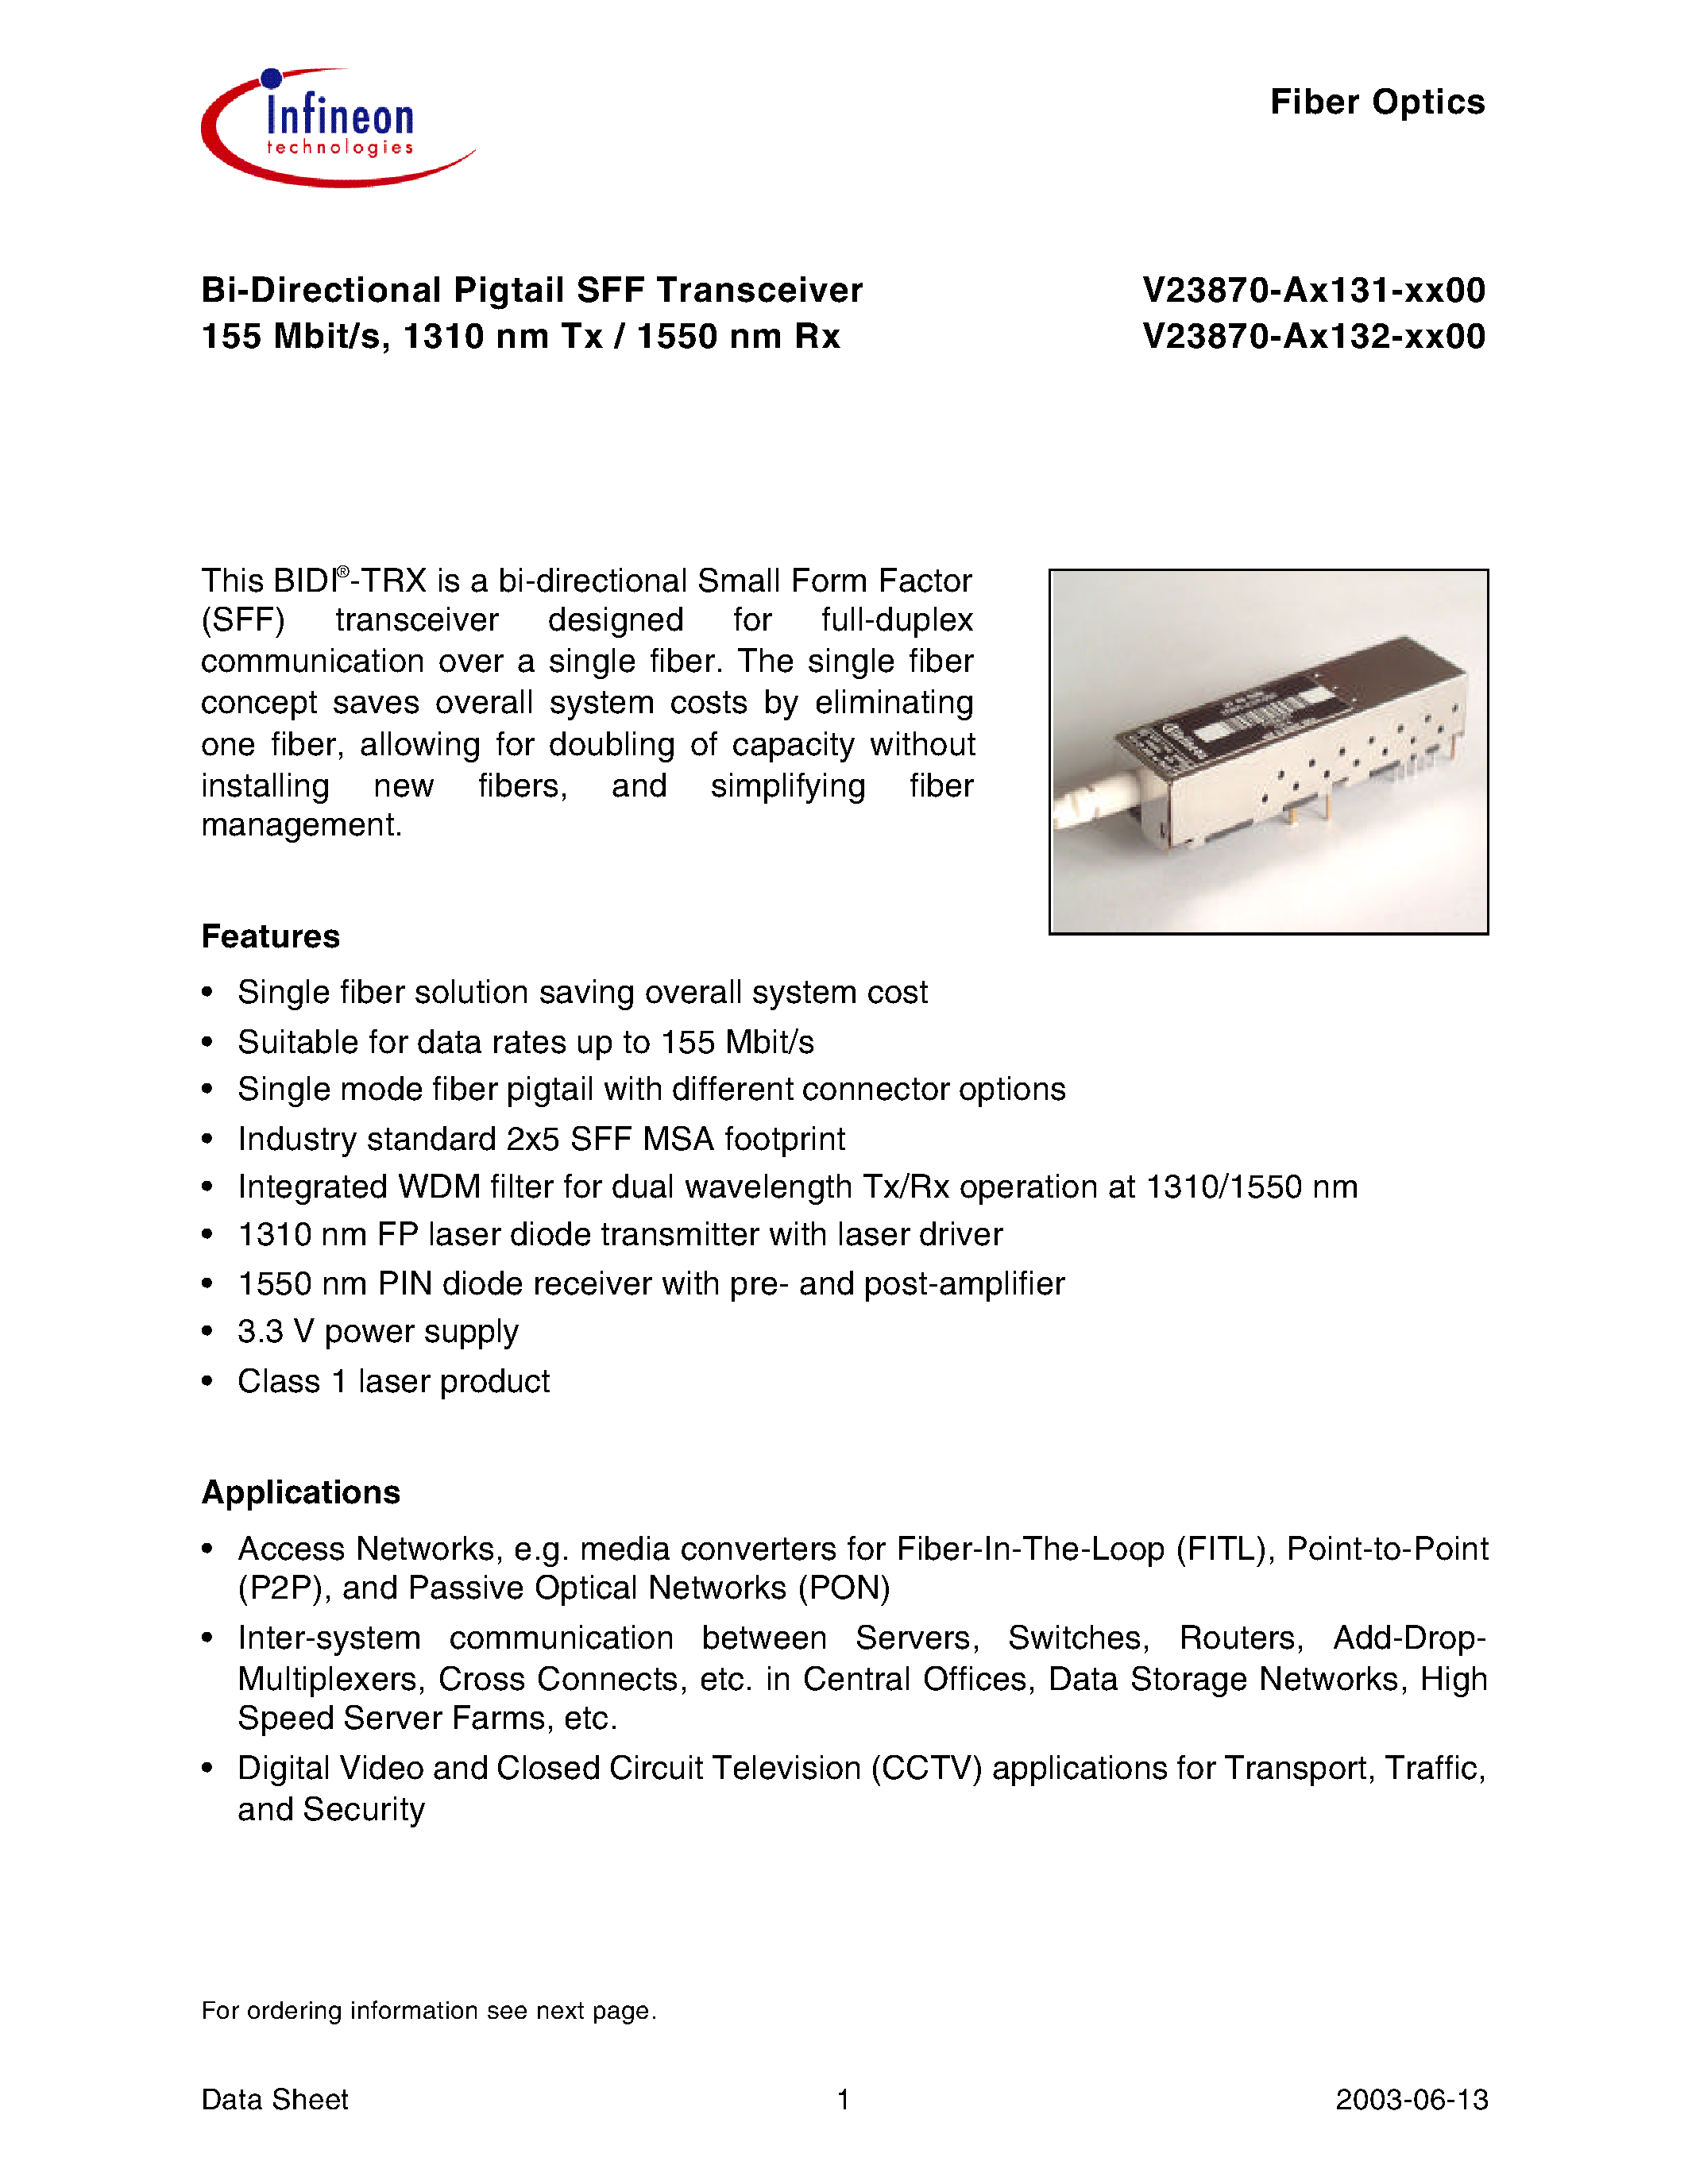 Даташит V23870-A3131-H100 - Bi-Directional Pigtail SFF Transceiver 155 Mbit/s/ 1310 nm Tx / 1550 nm Rx страница 1